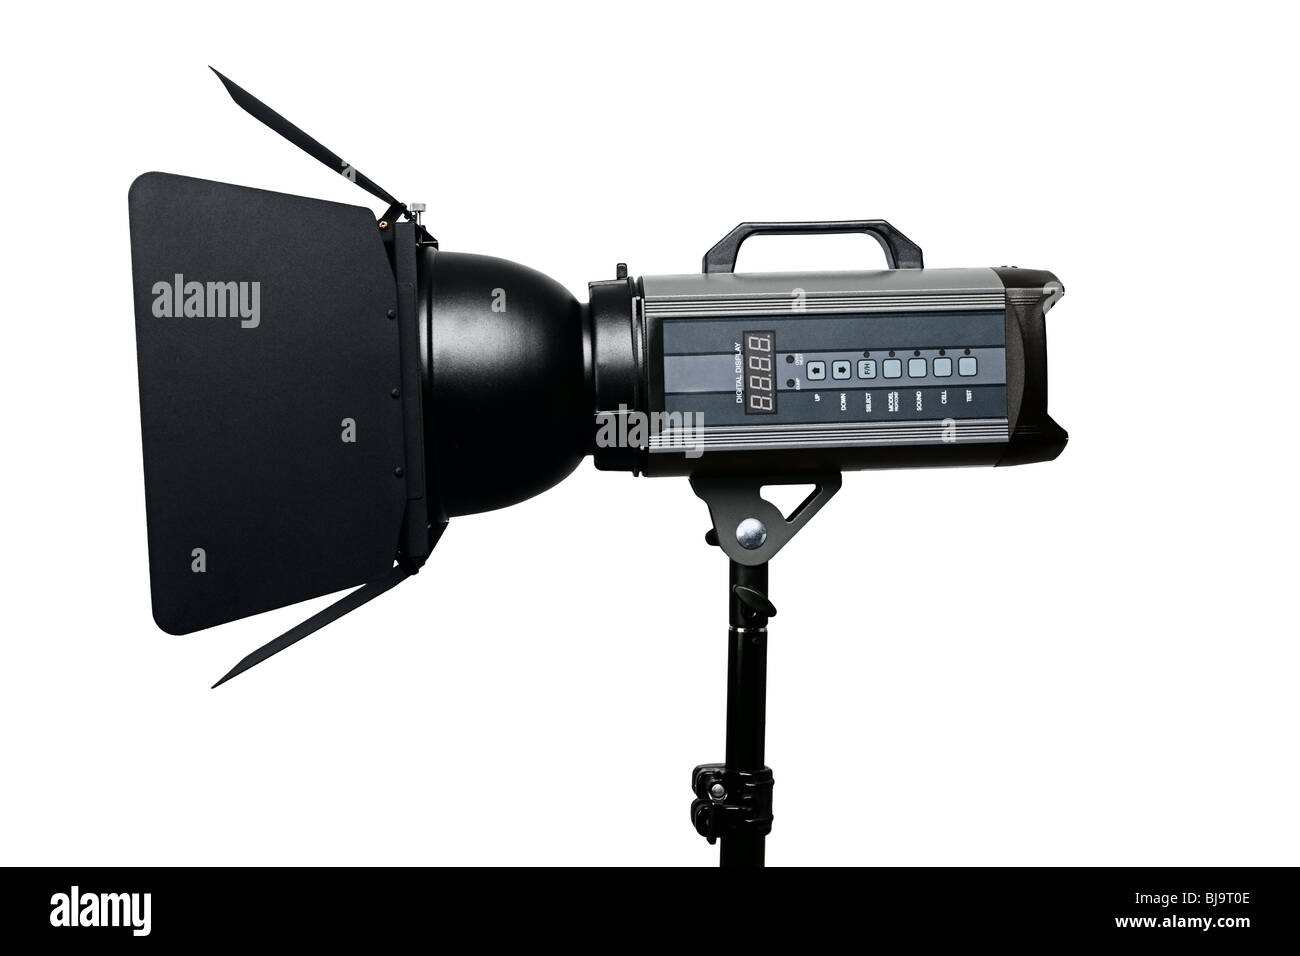 Photo studio flash lighting equipment isolated on white background Stock Photo